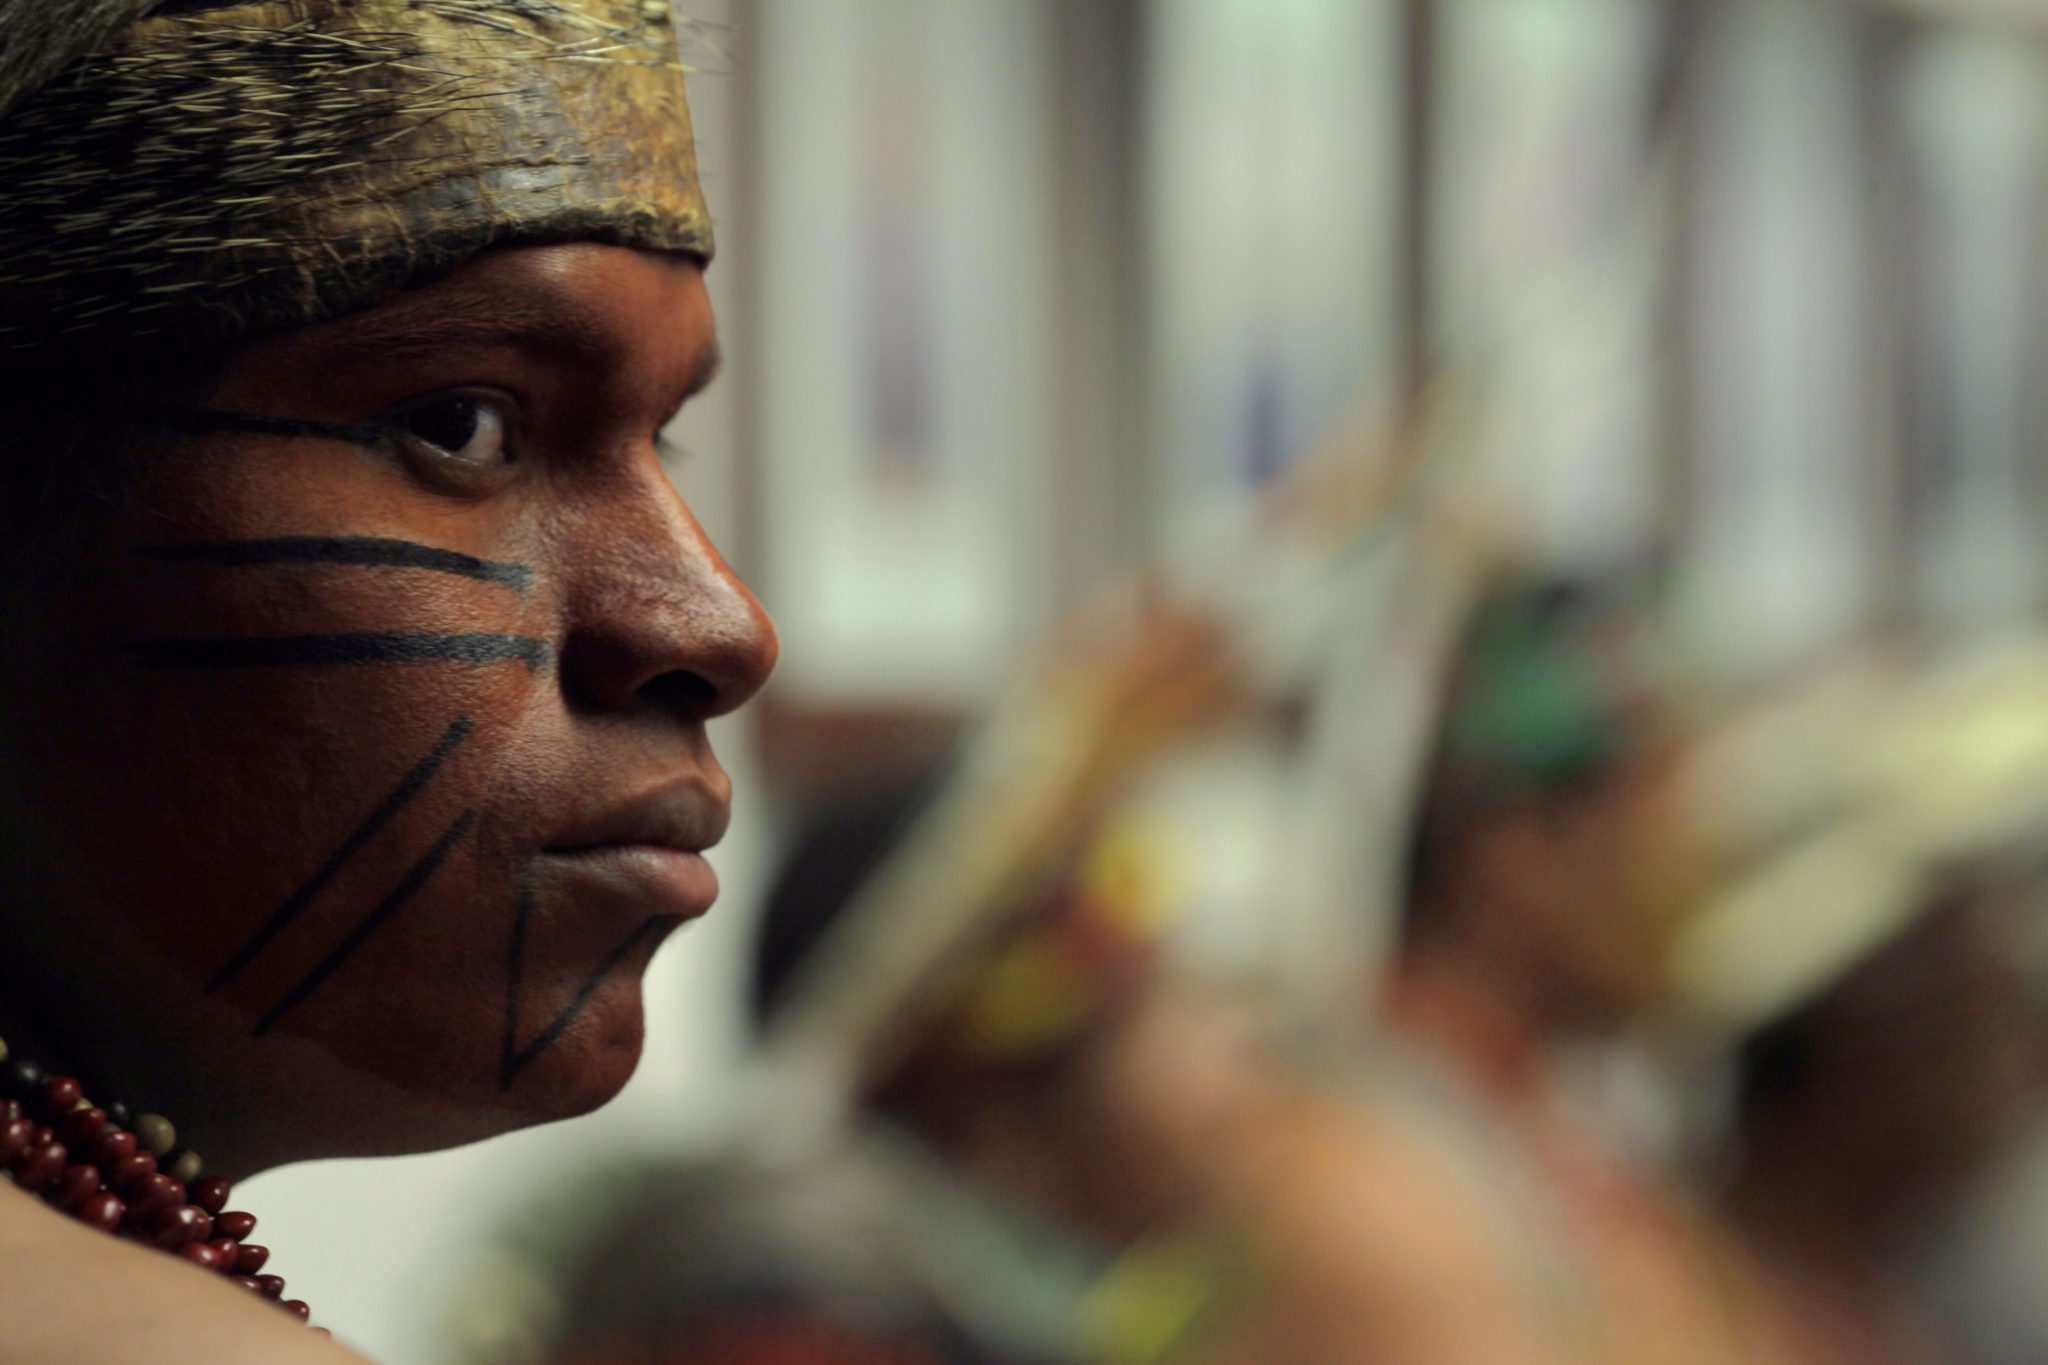 Brasile, è morto “l’indigeno della buca”